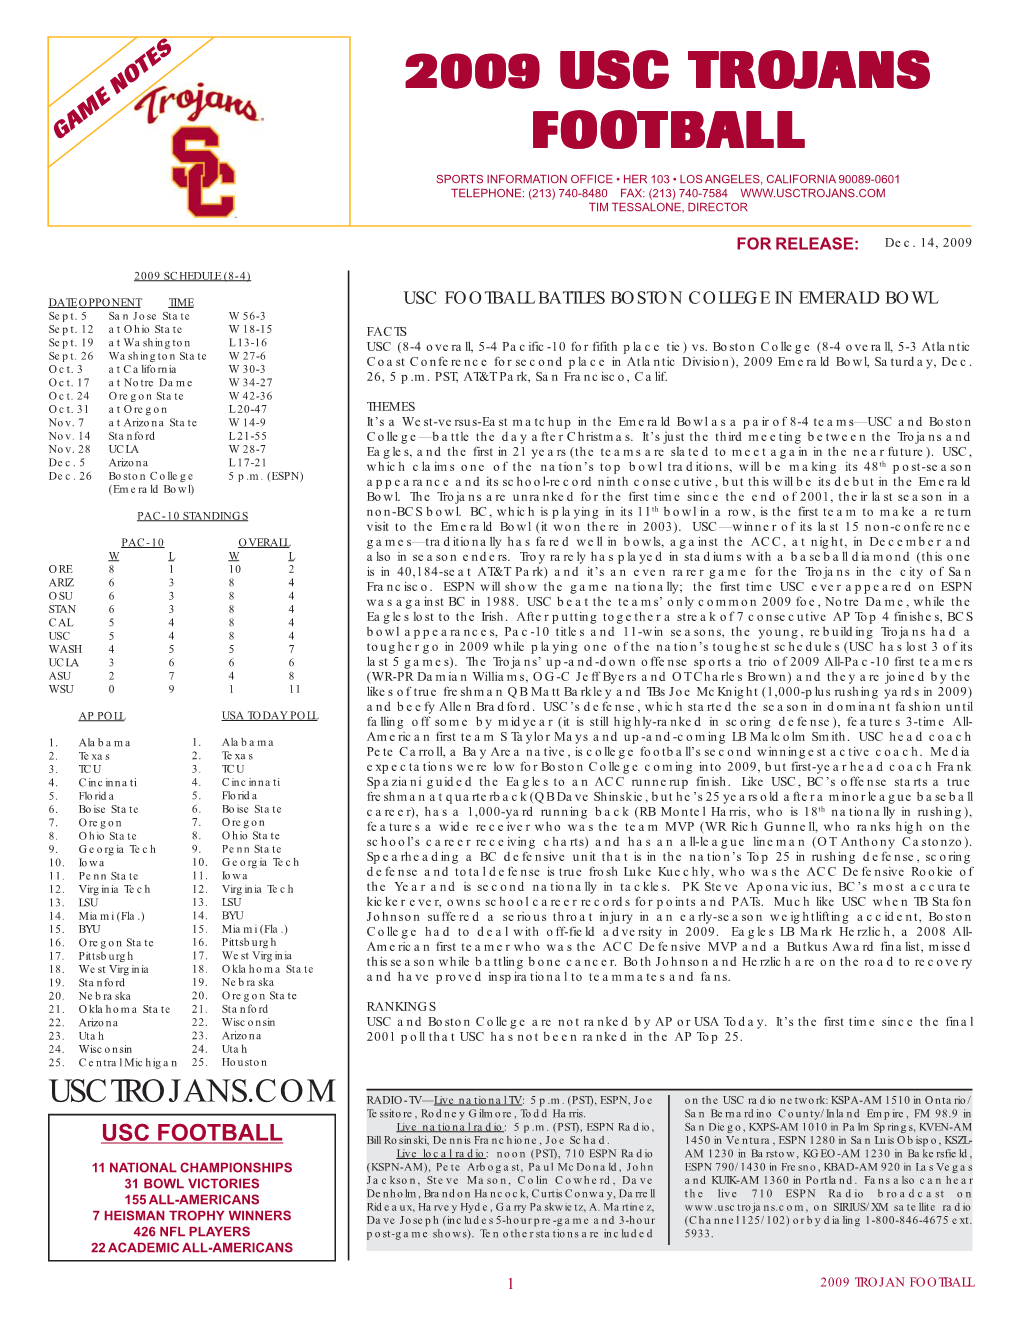 2009 USC Trojans Football USC Overall Team Statistics (As of Dec 05, 2009) All Games